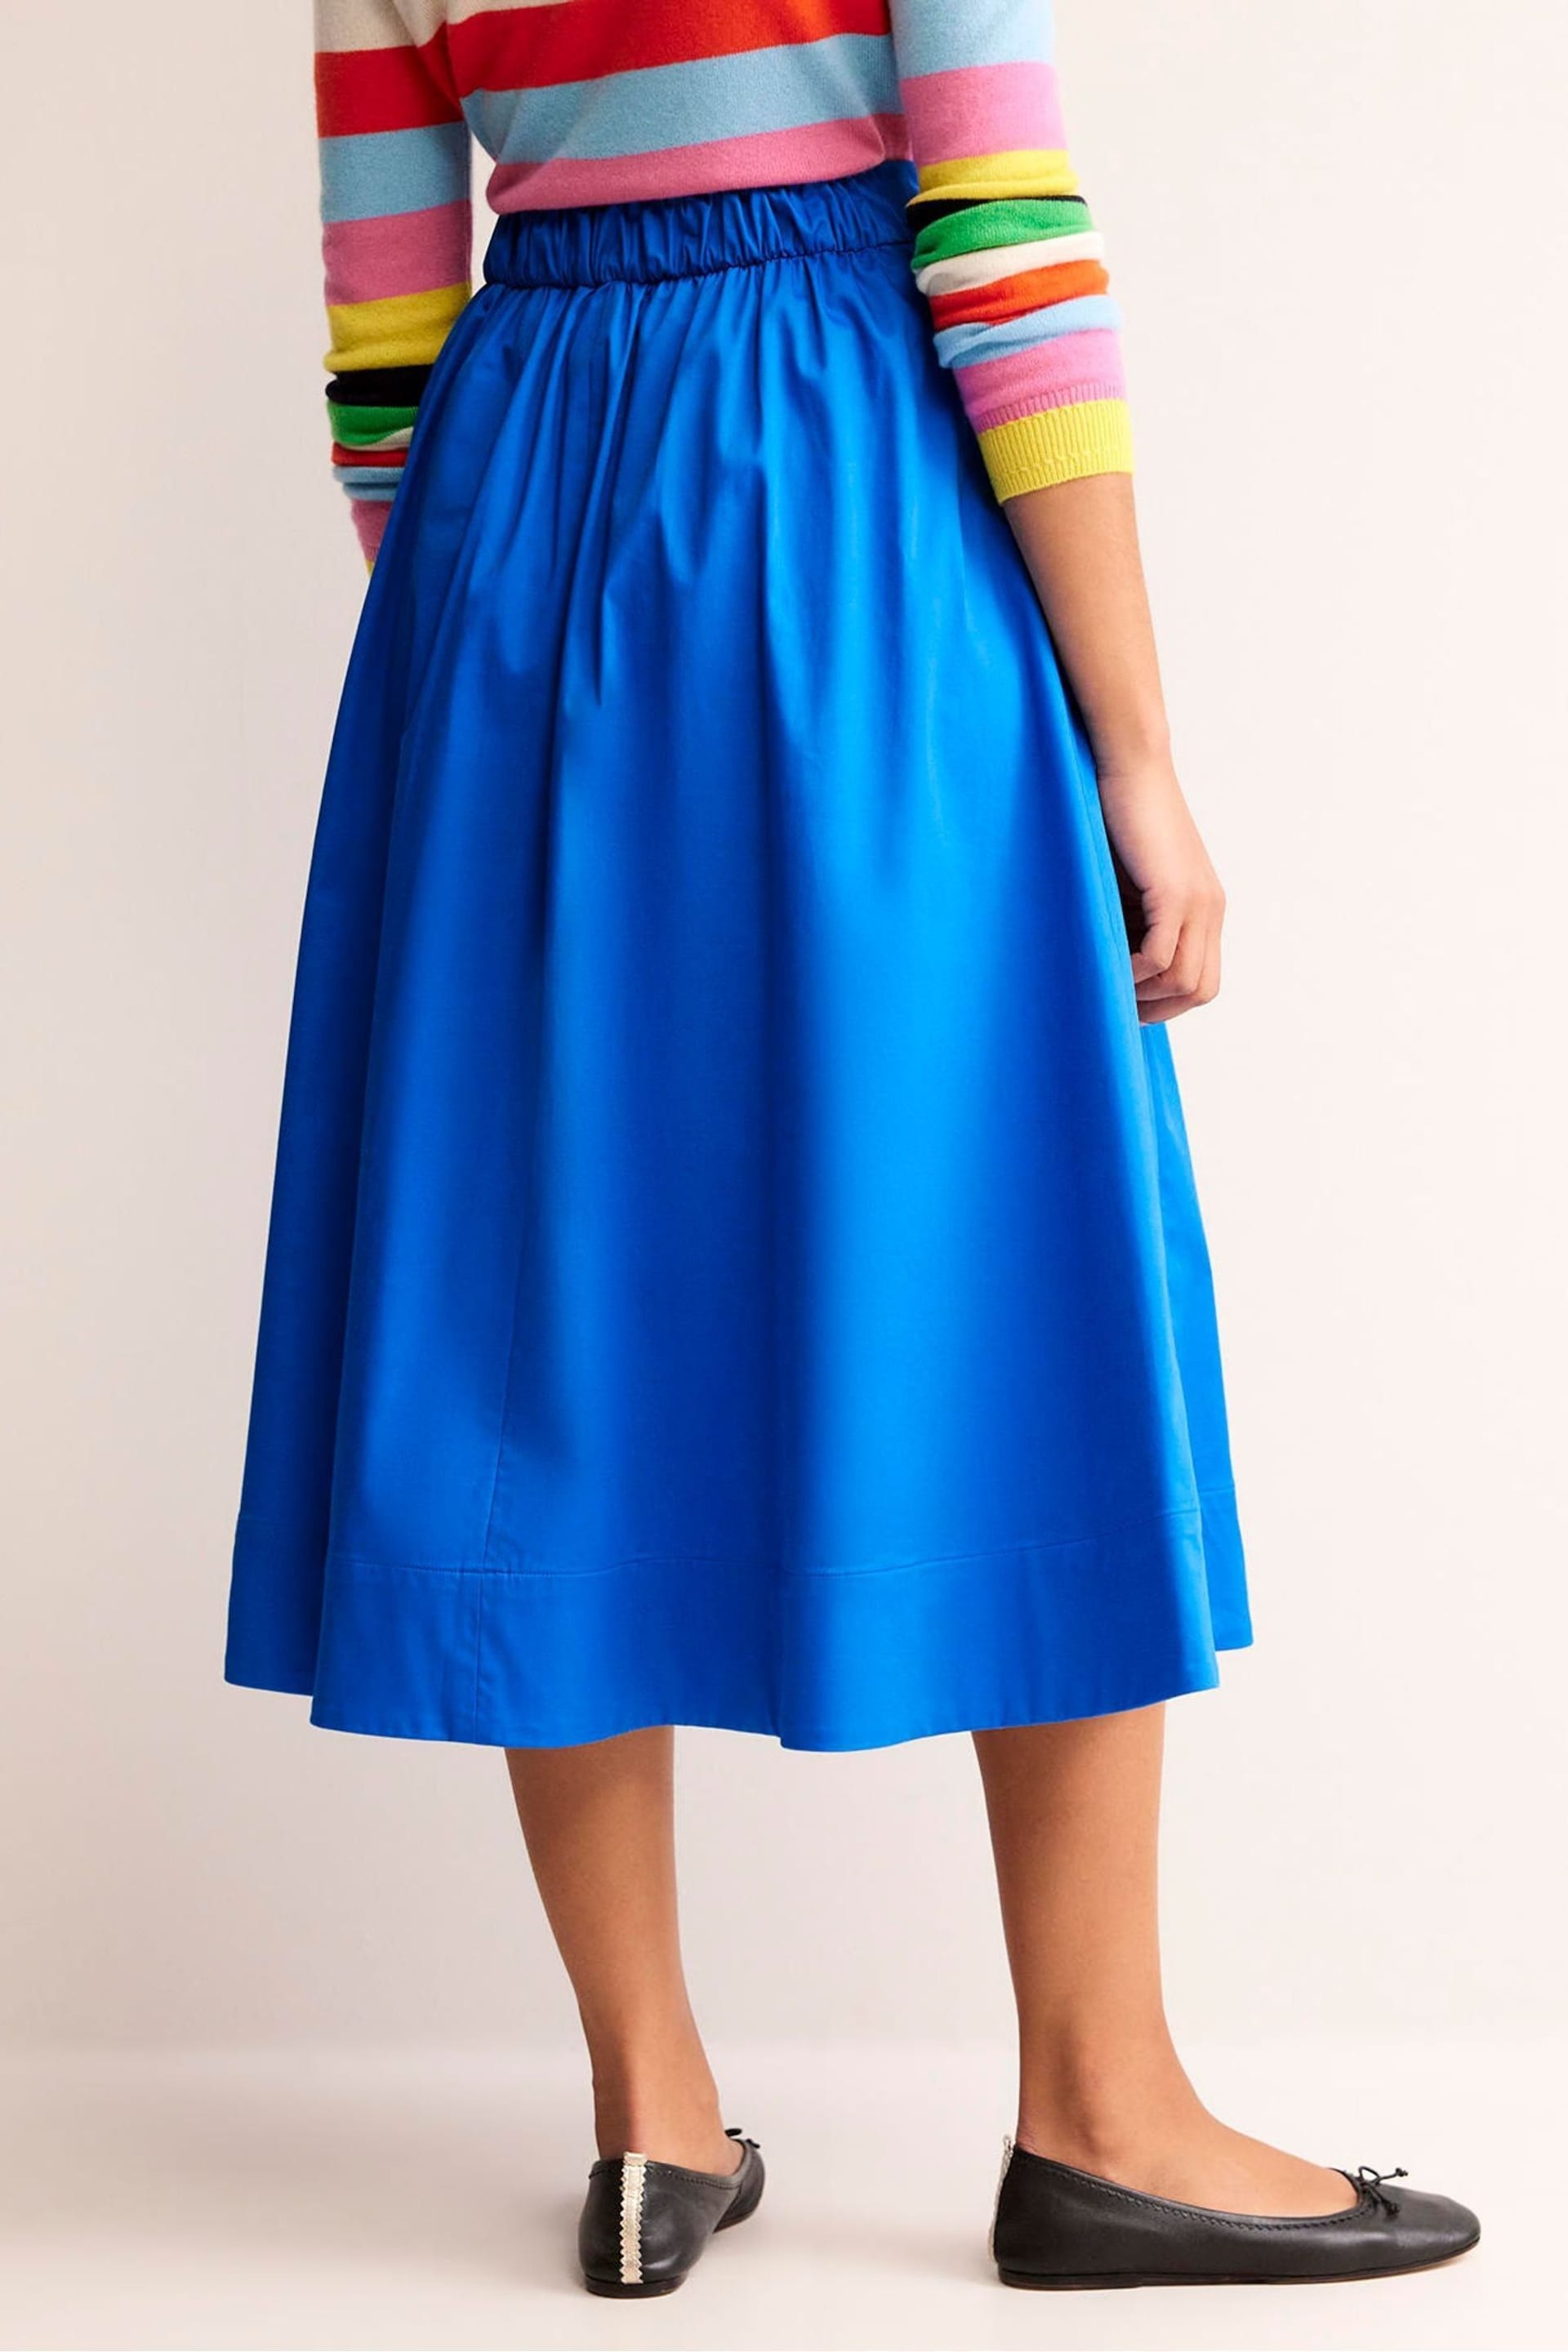 Boden Blue Petite Isabella Cotton Sateen Skirt - Image 2 of 5